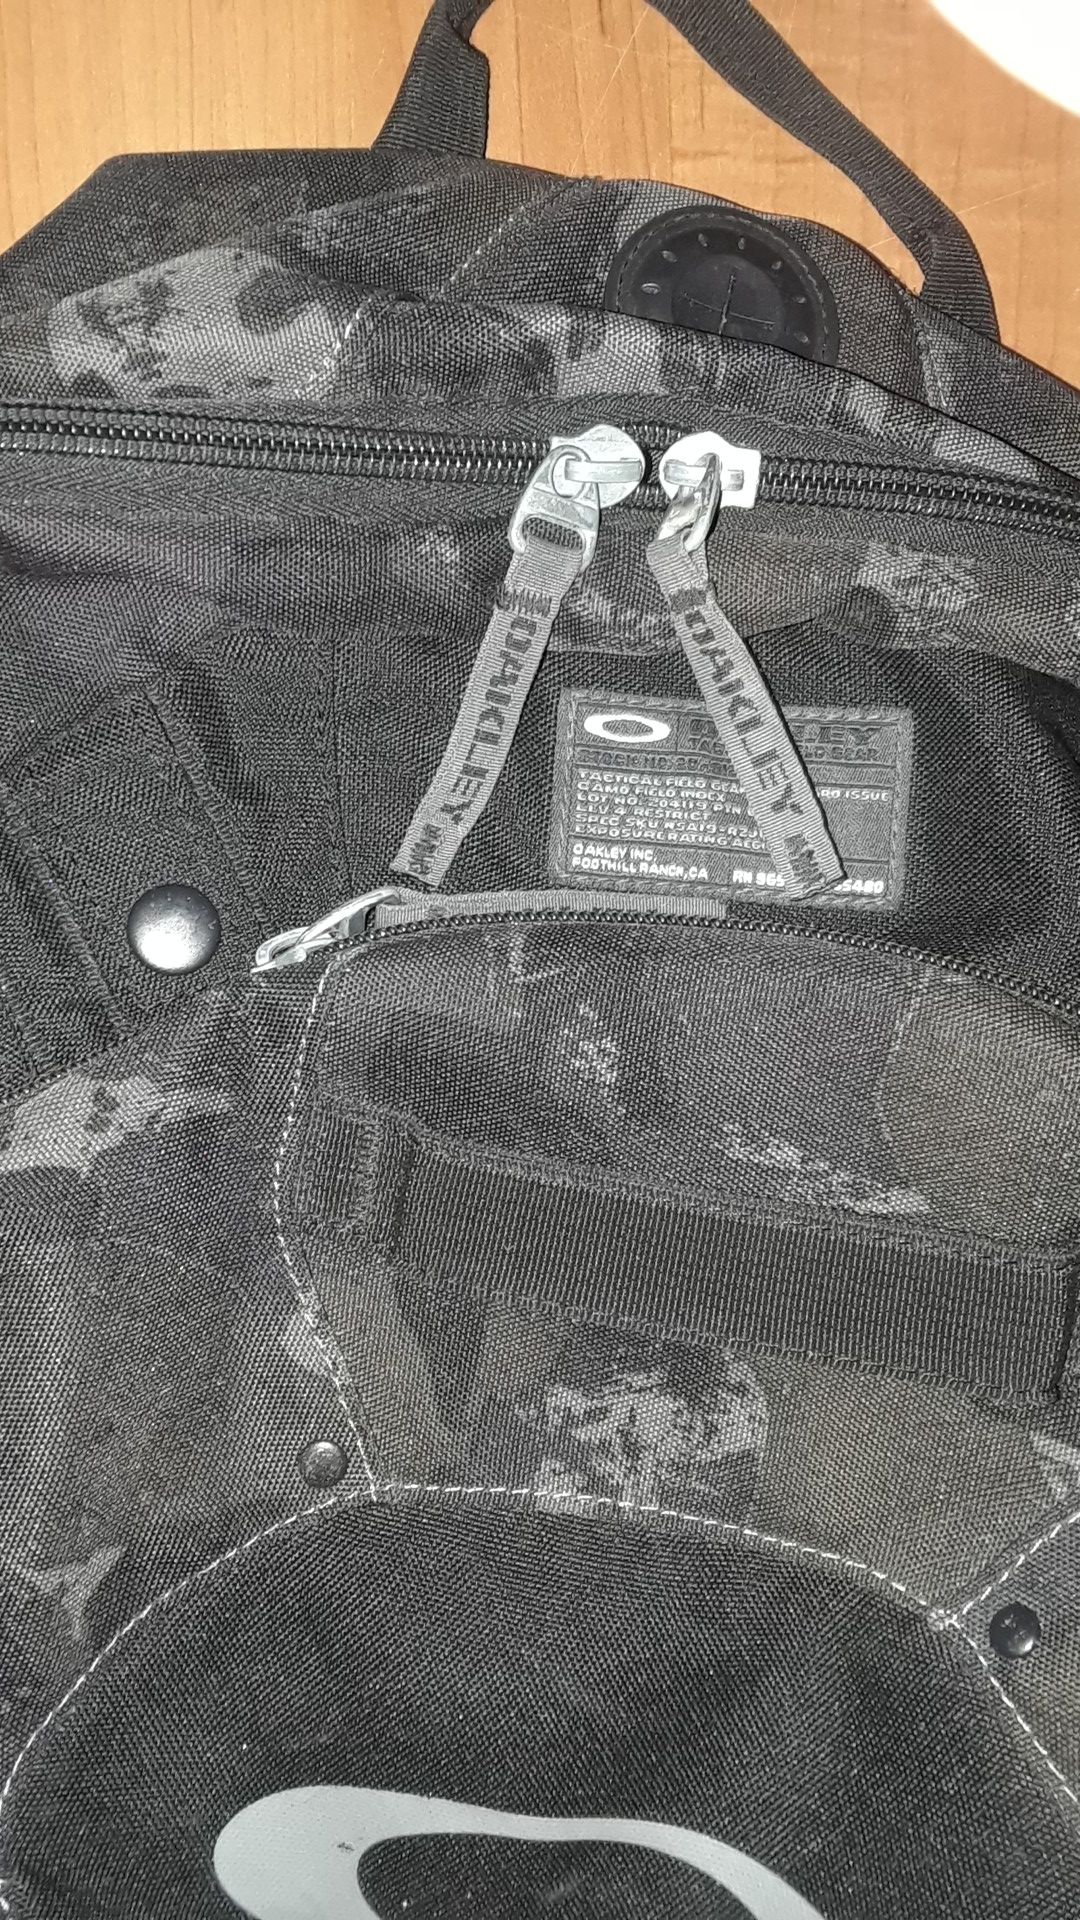 Oakley tactical backpack